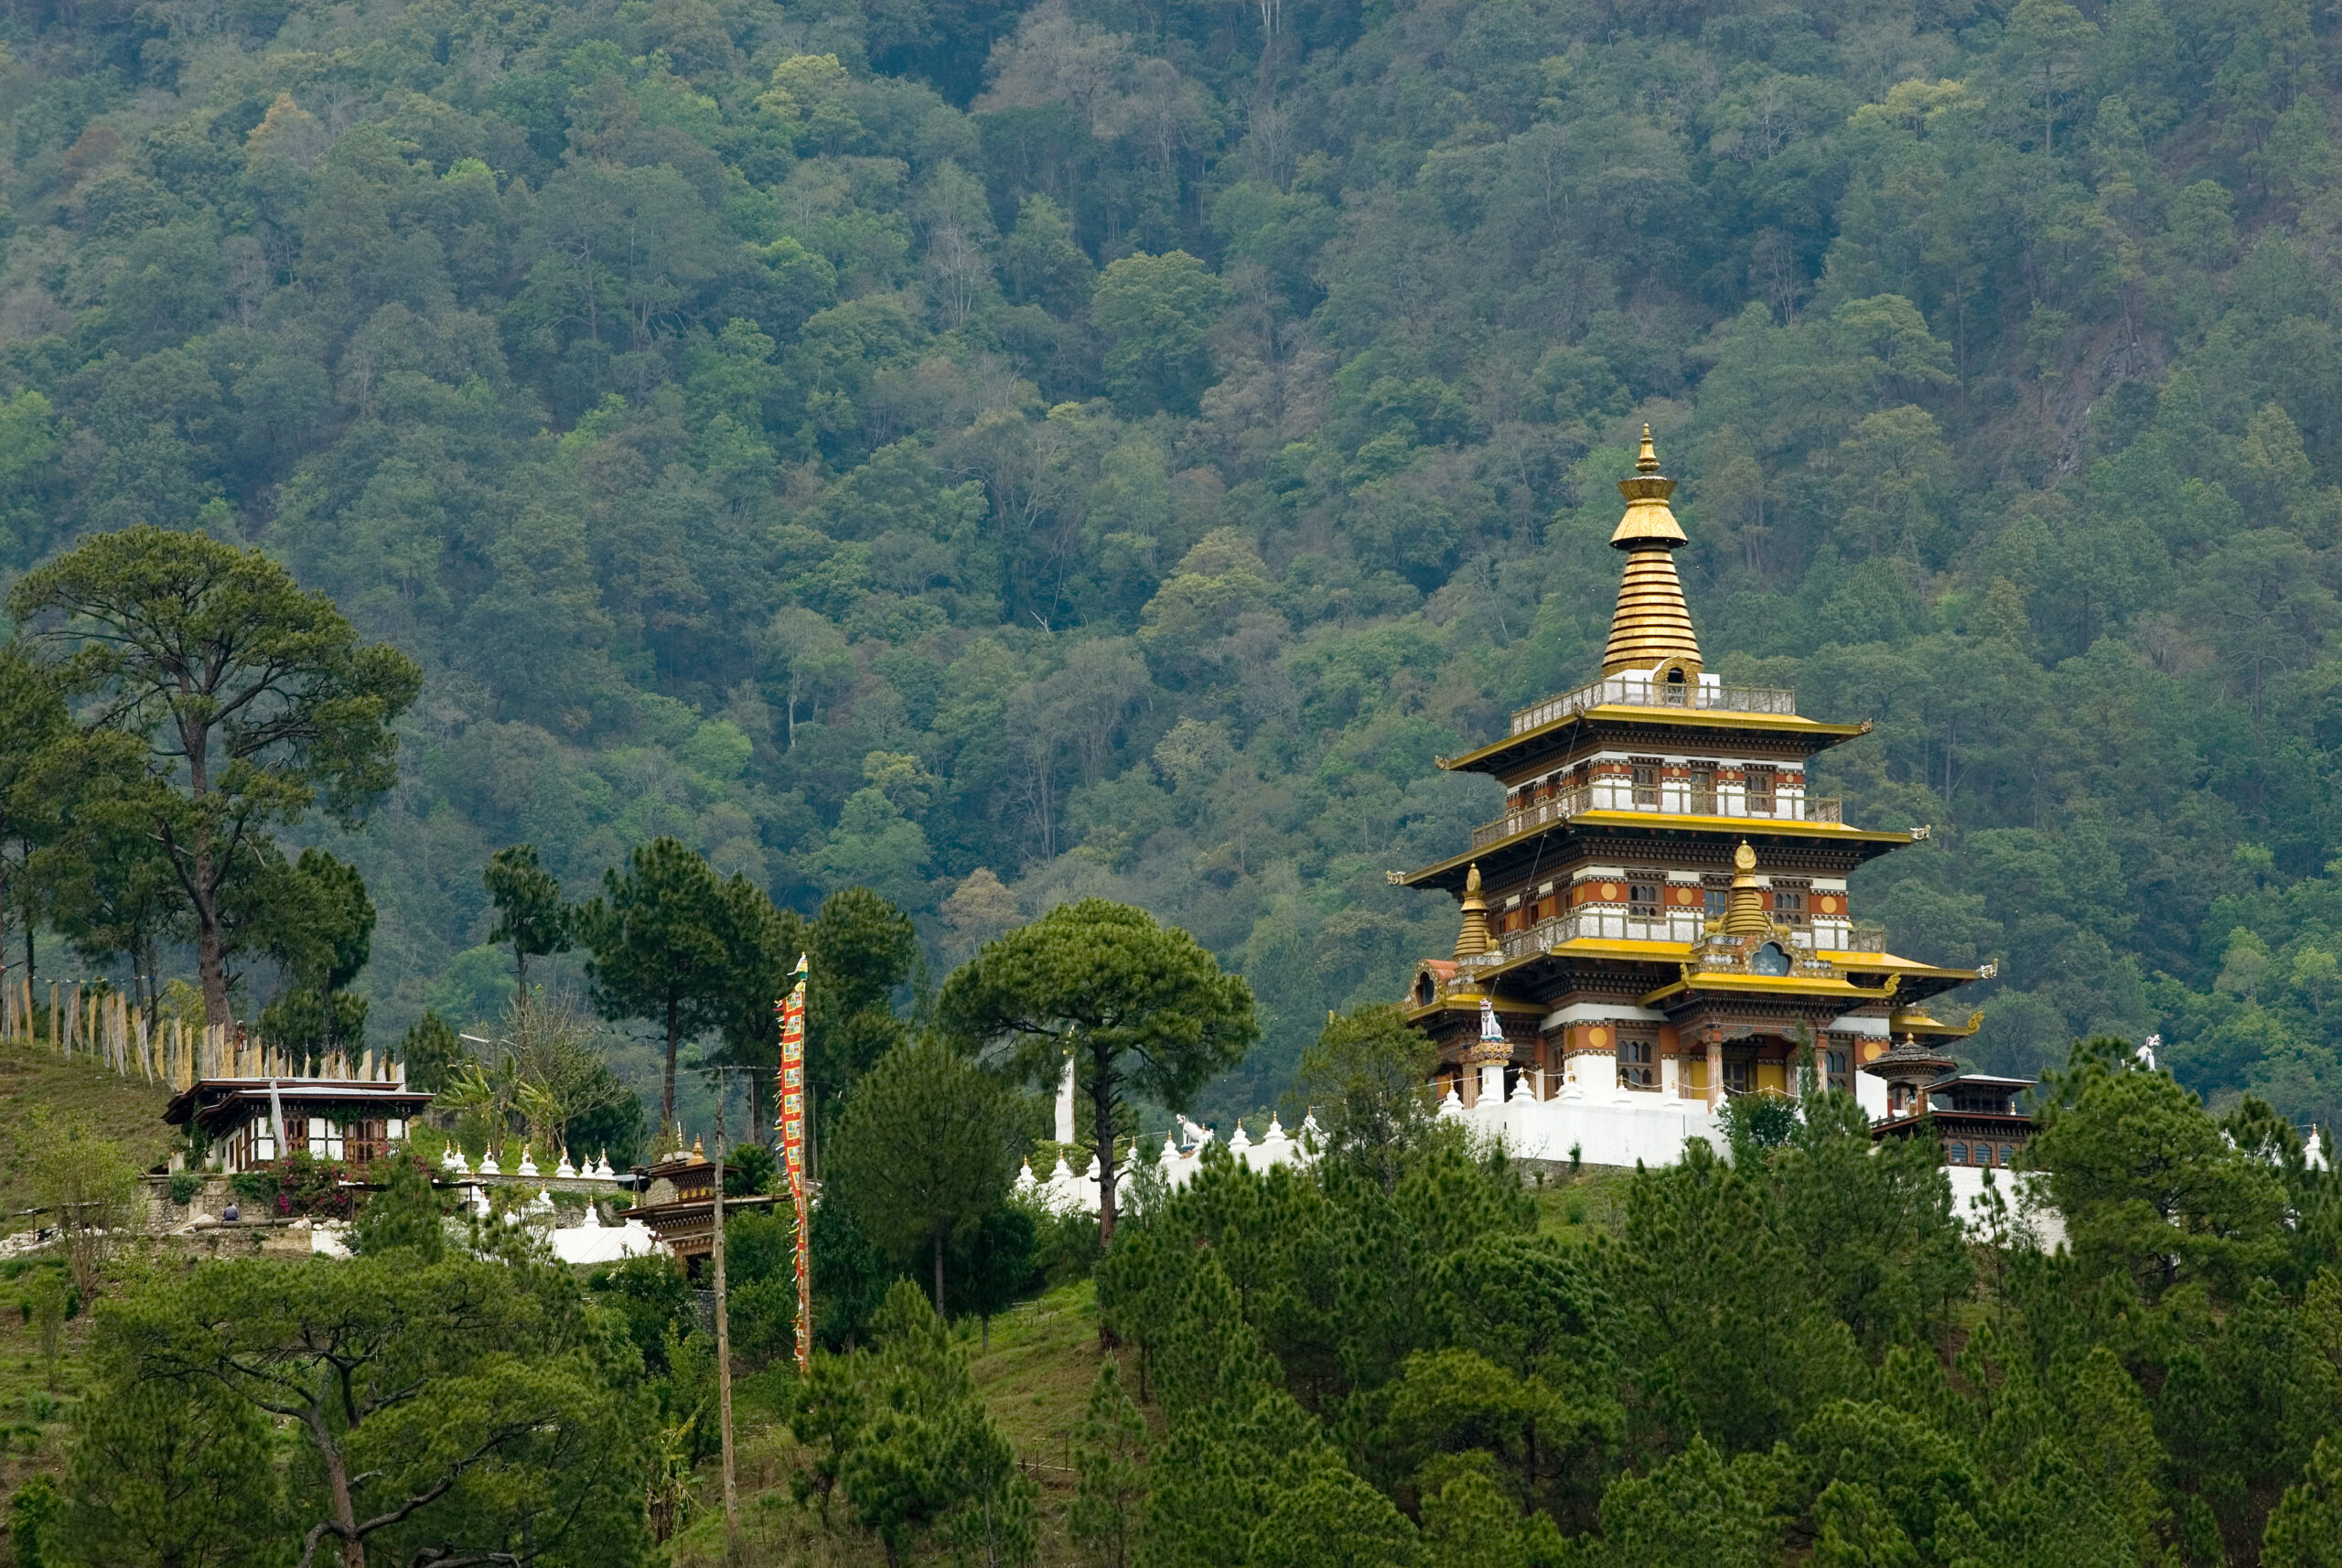 Khamsum Yulley Monastery in Bhutan